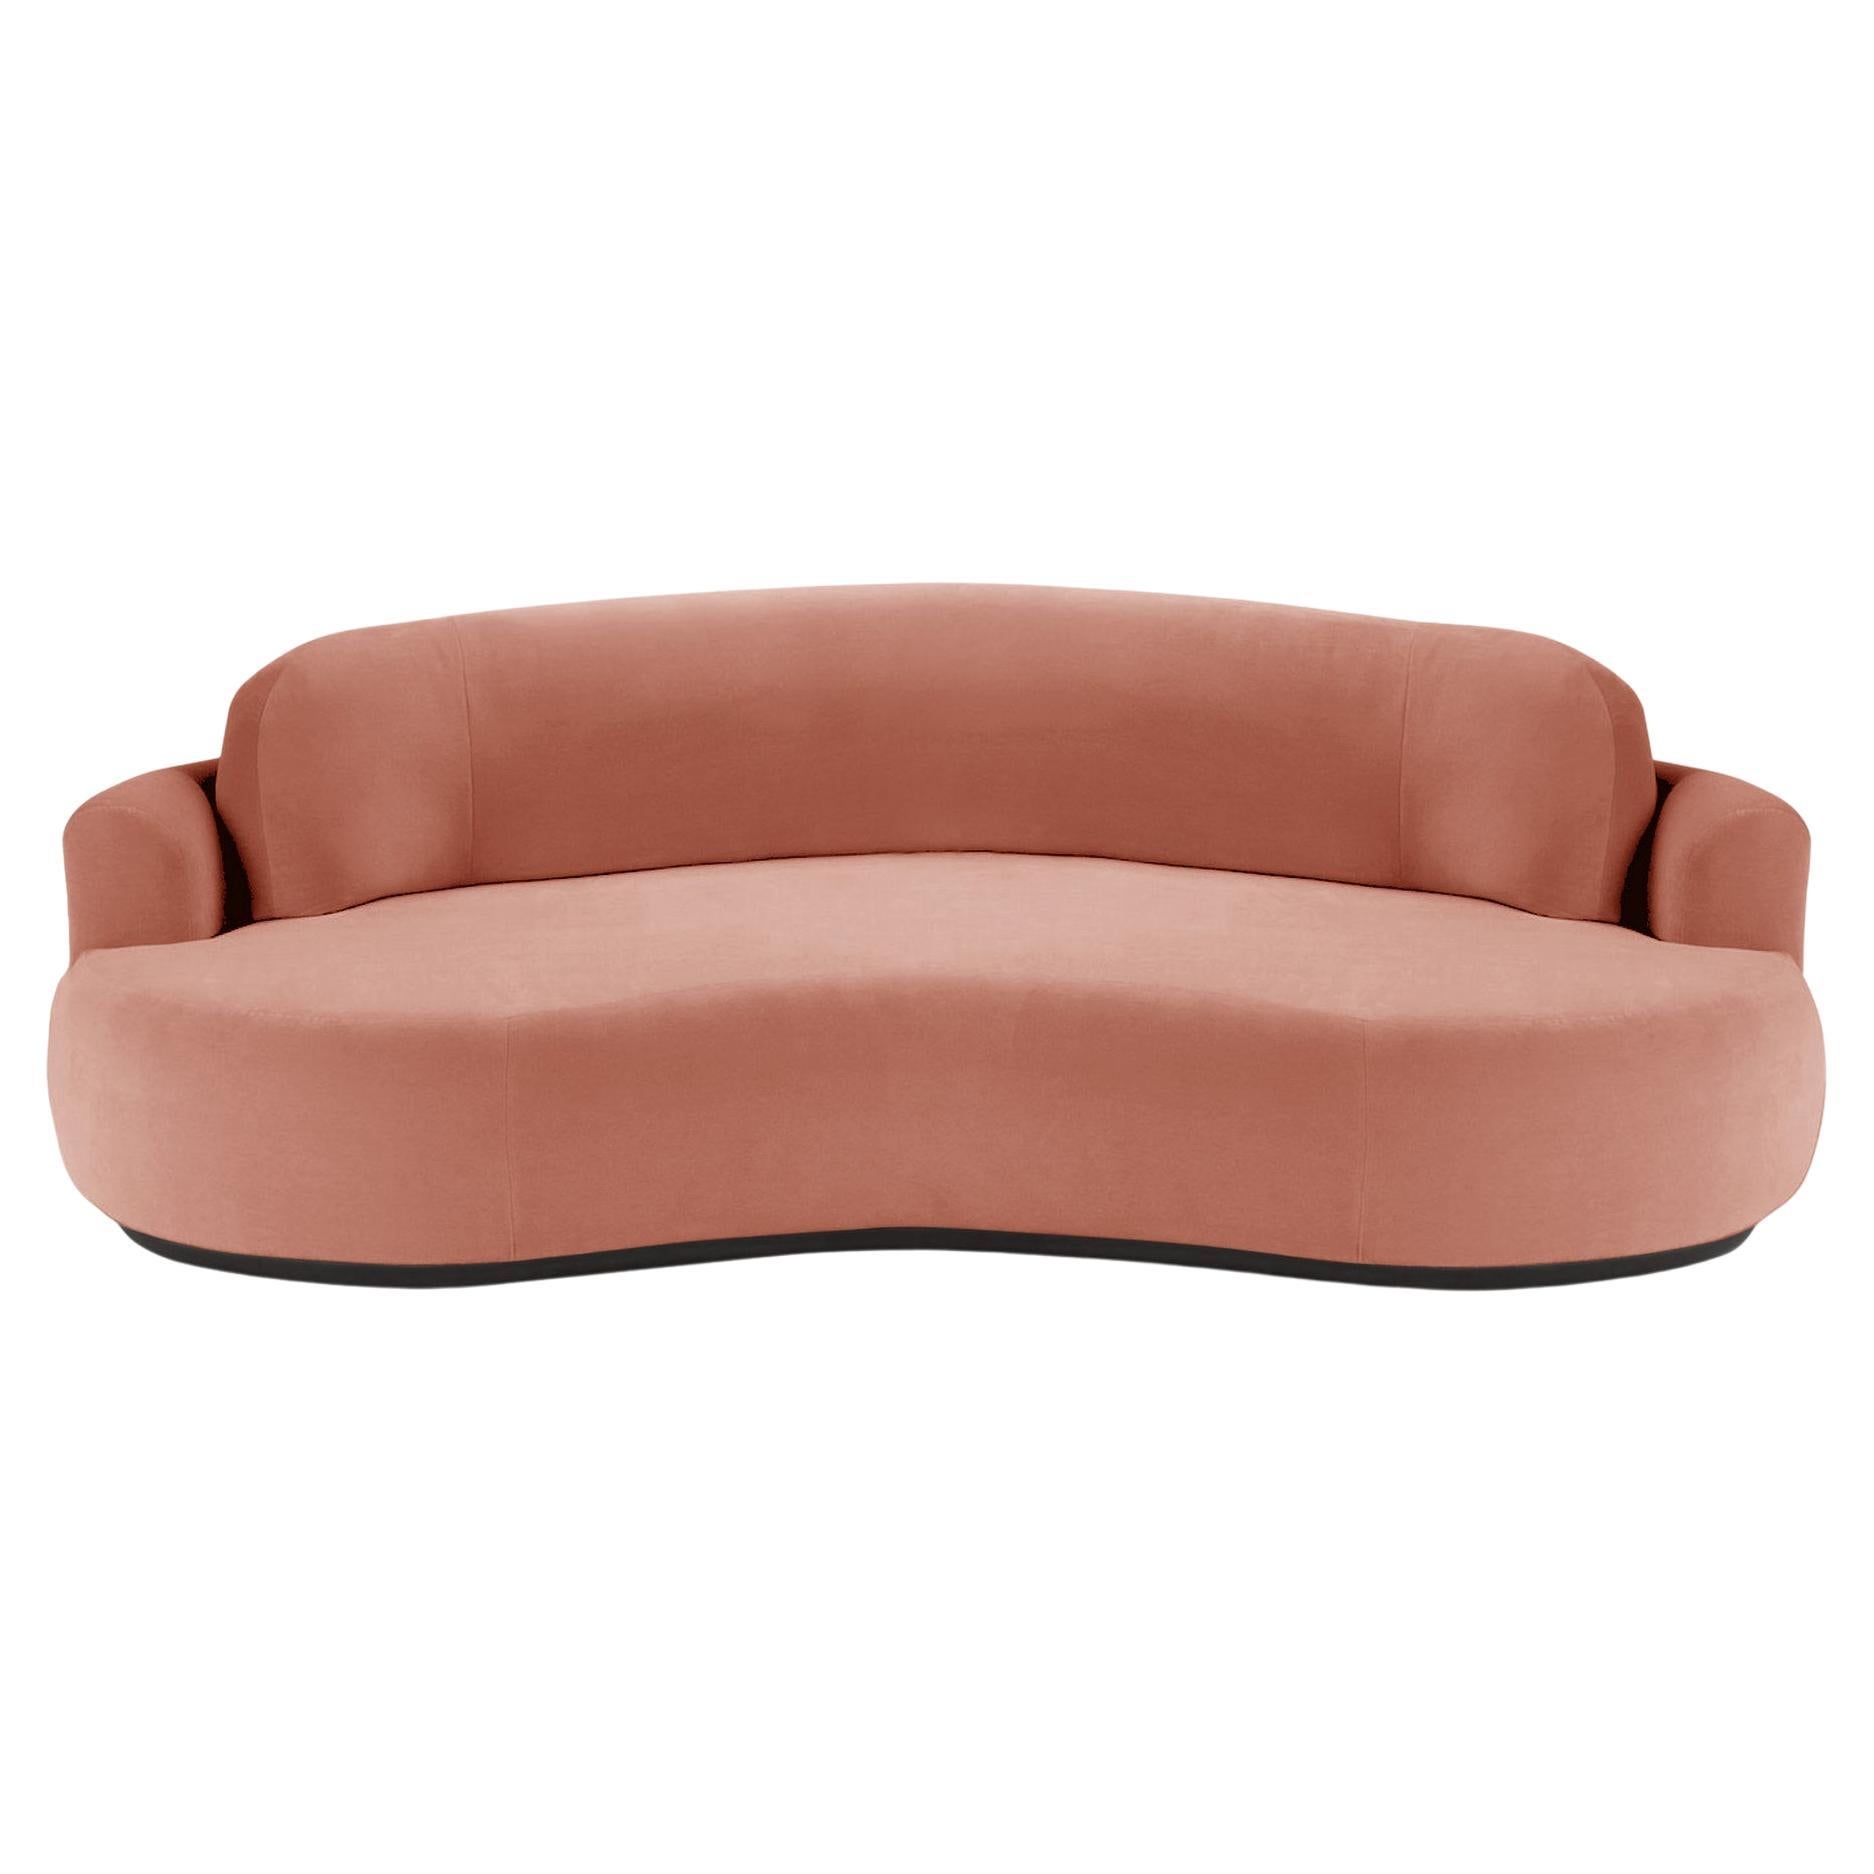 Naked Curved Sofa, Medium with Beech Ash-056-5 and Paris Brick